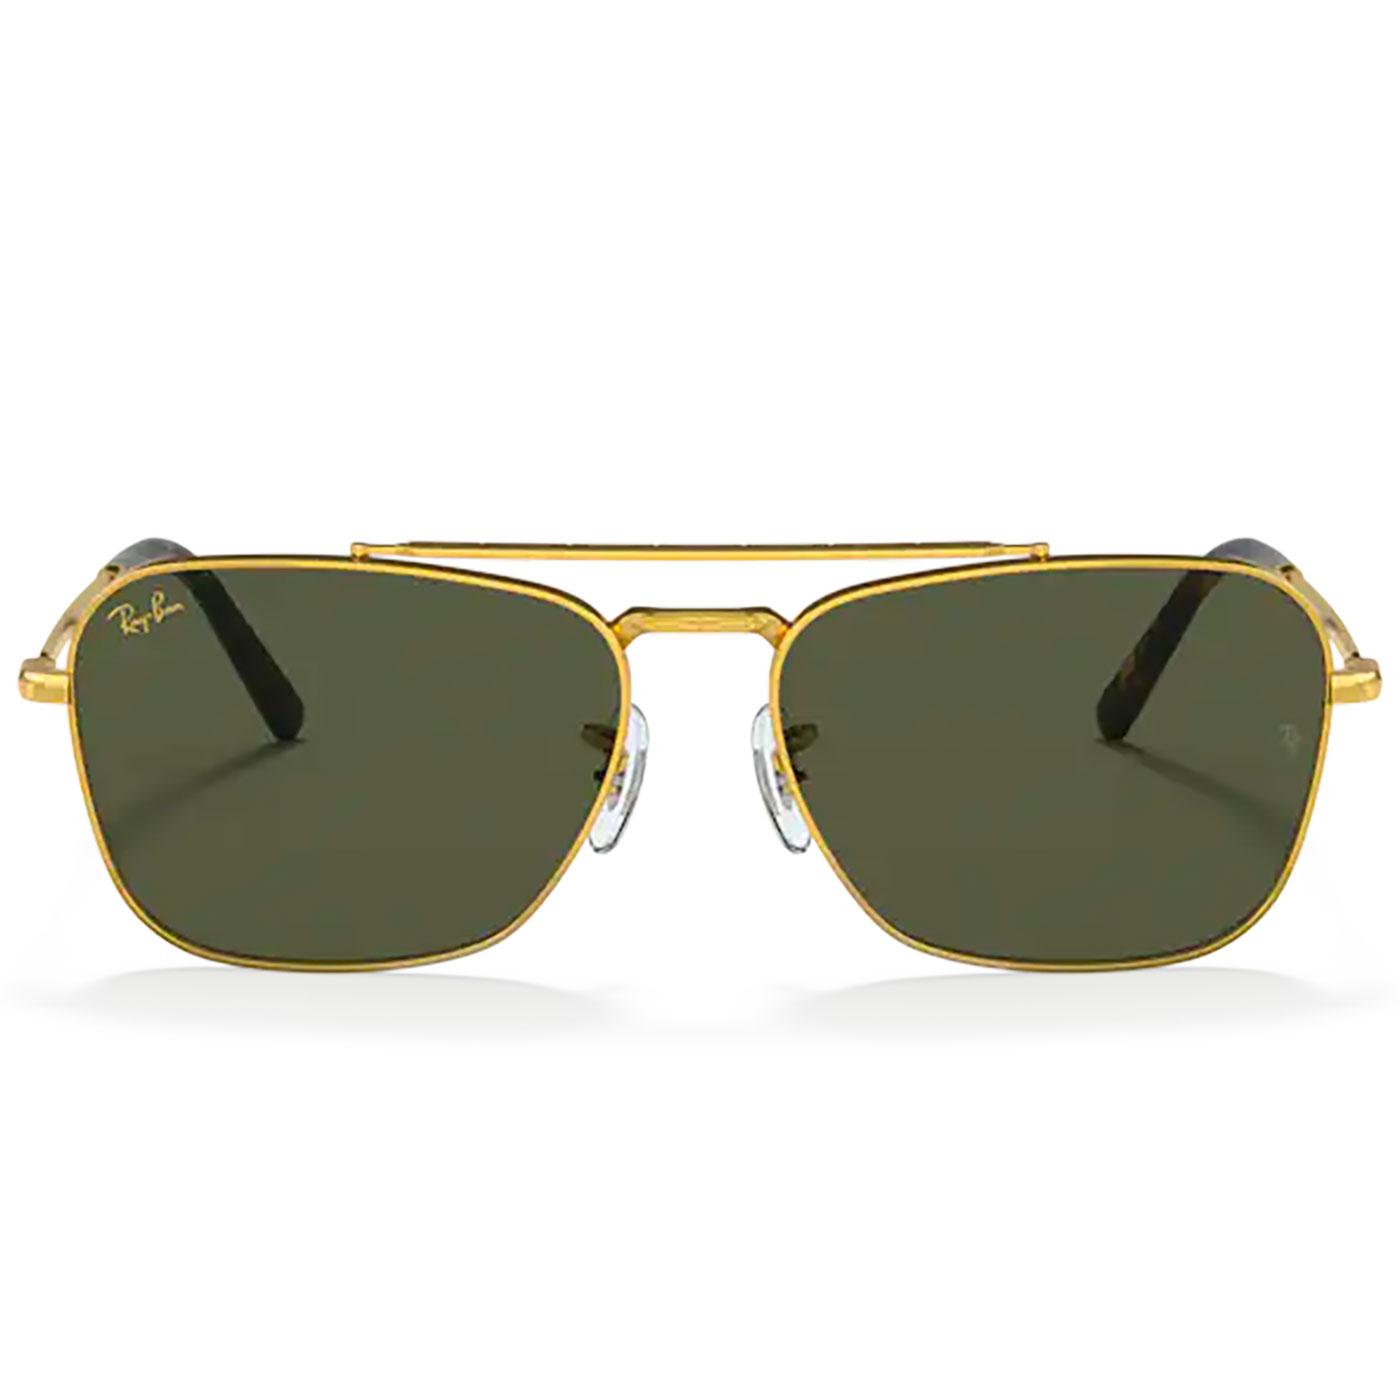 New Caravan RAY-BAN Retro 60s Mod Sunglasses Gold